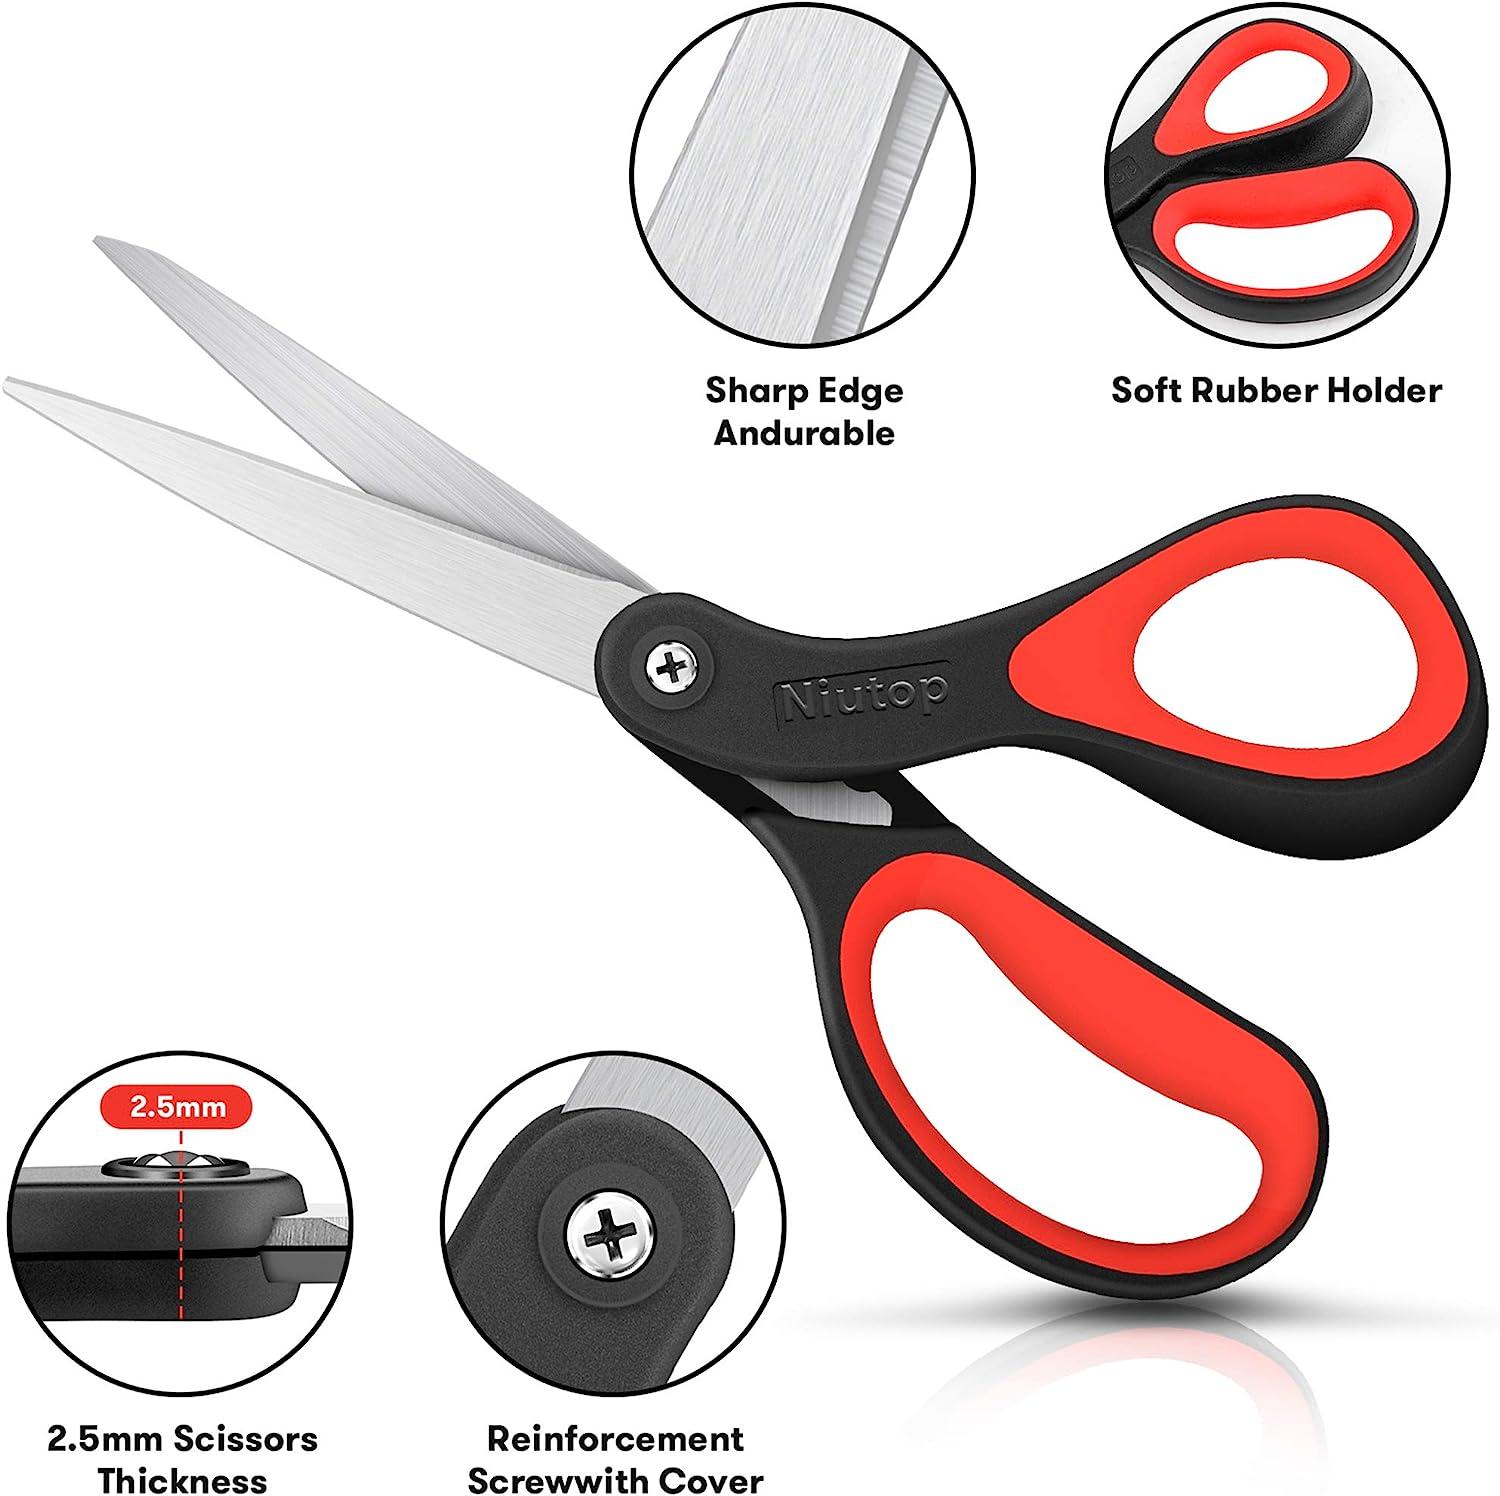 Extra Sharp Black-Bladed Scissors Multi-Purpose Shears, For Fabric Leather,  Home & Office, Art & School, Household, Children's Scissors